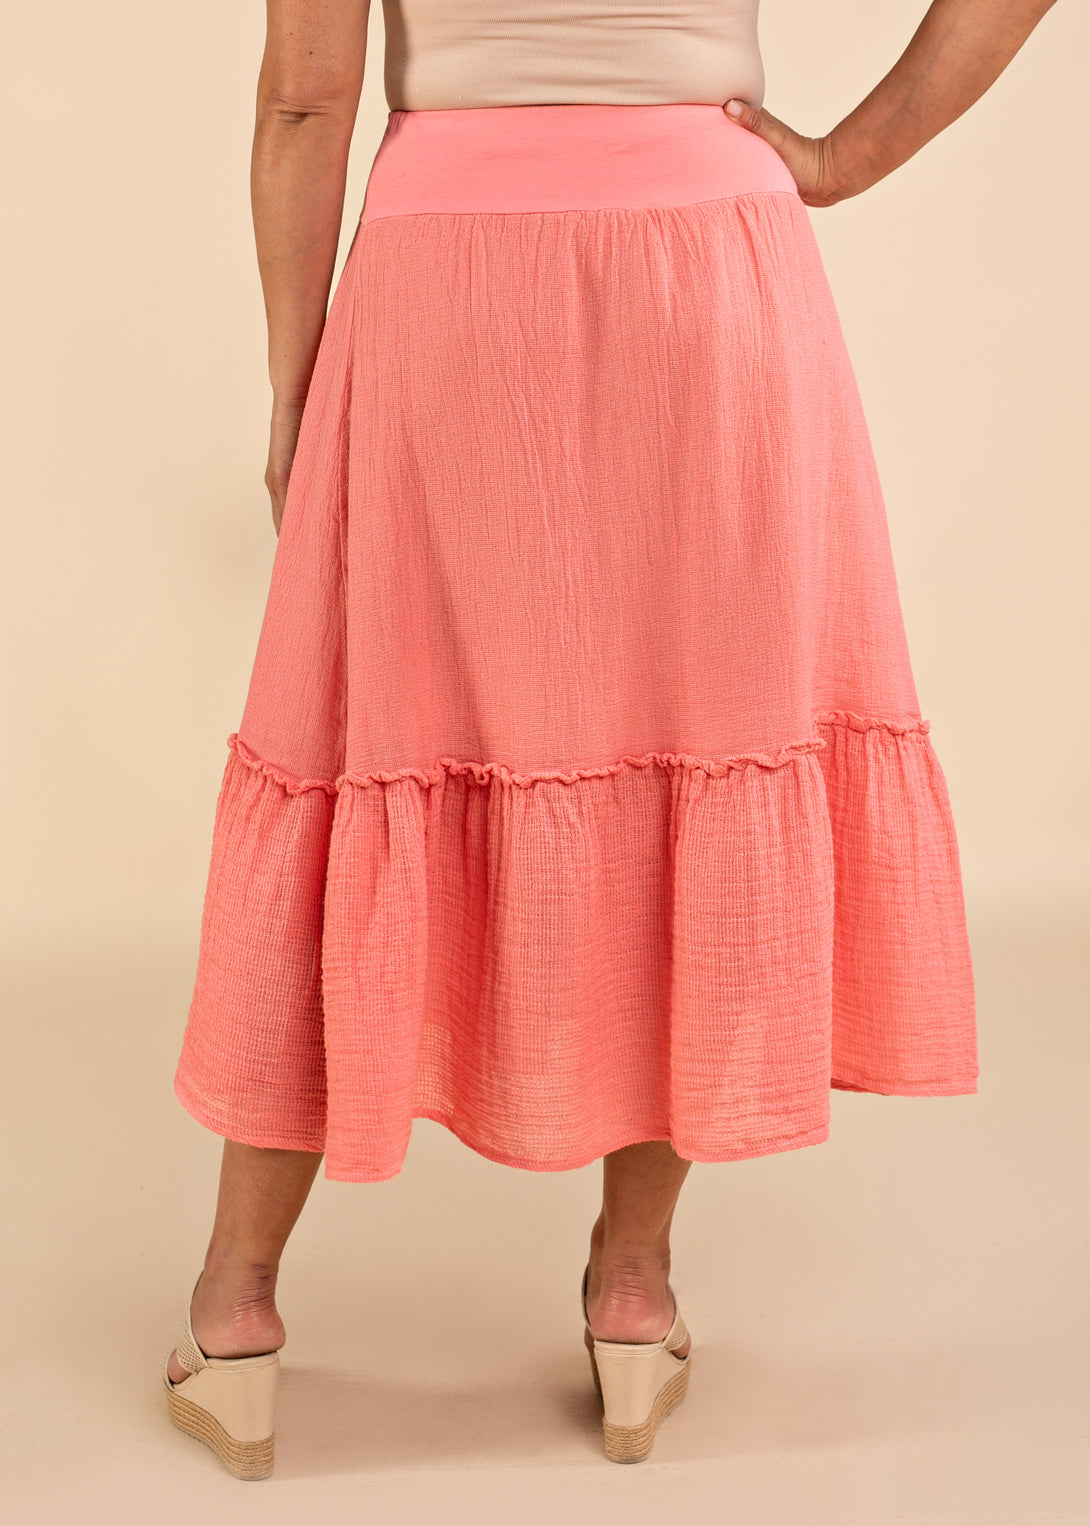 Elva Linen Skirt in Coral Crush - Imagine Fashion